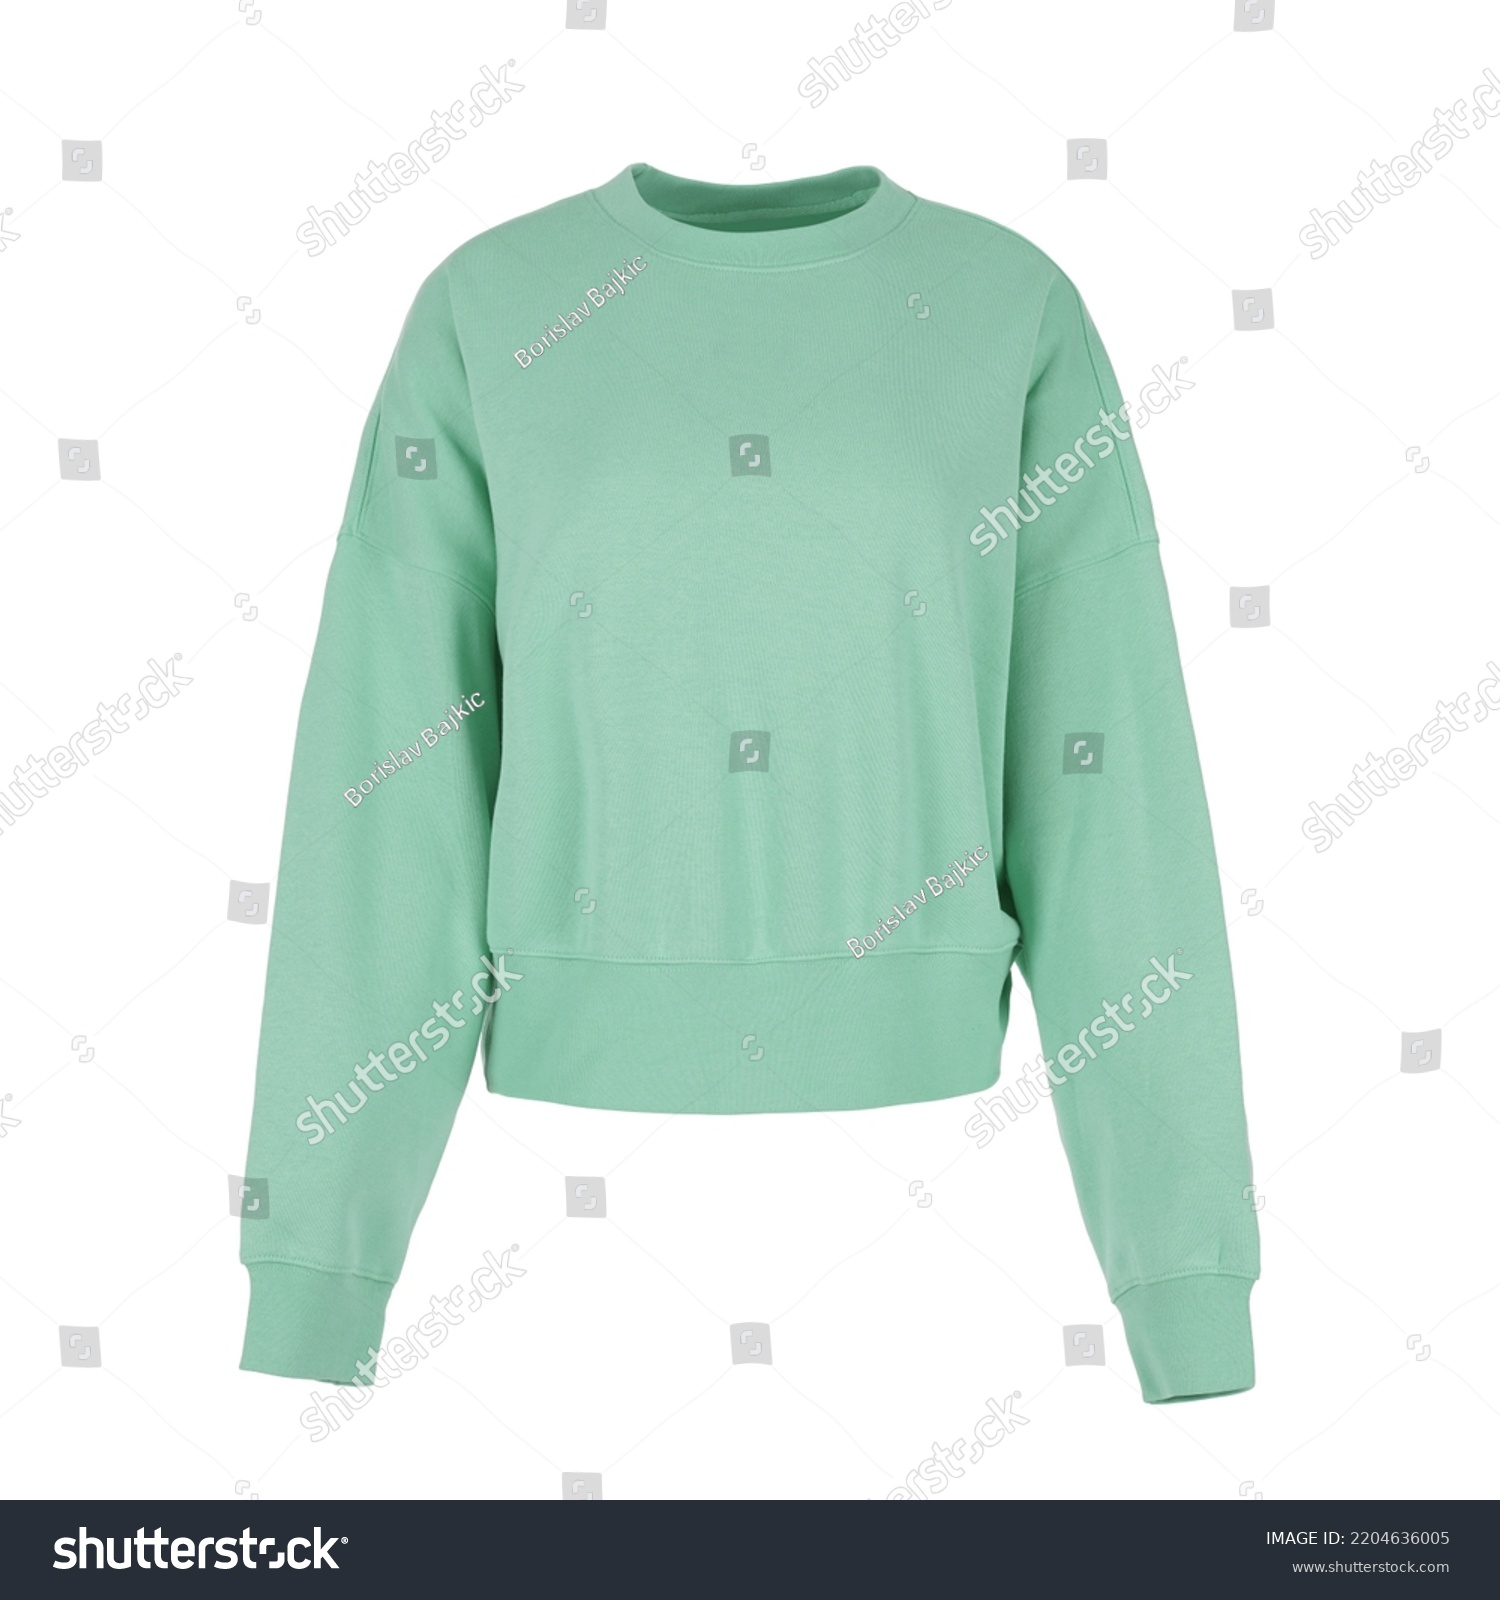 Women's green sweatshirt with long sleeves #2204636005